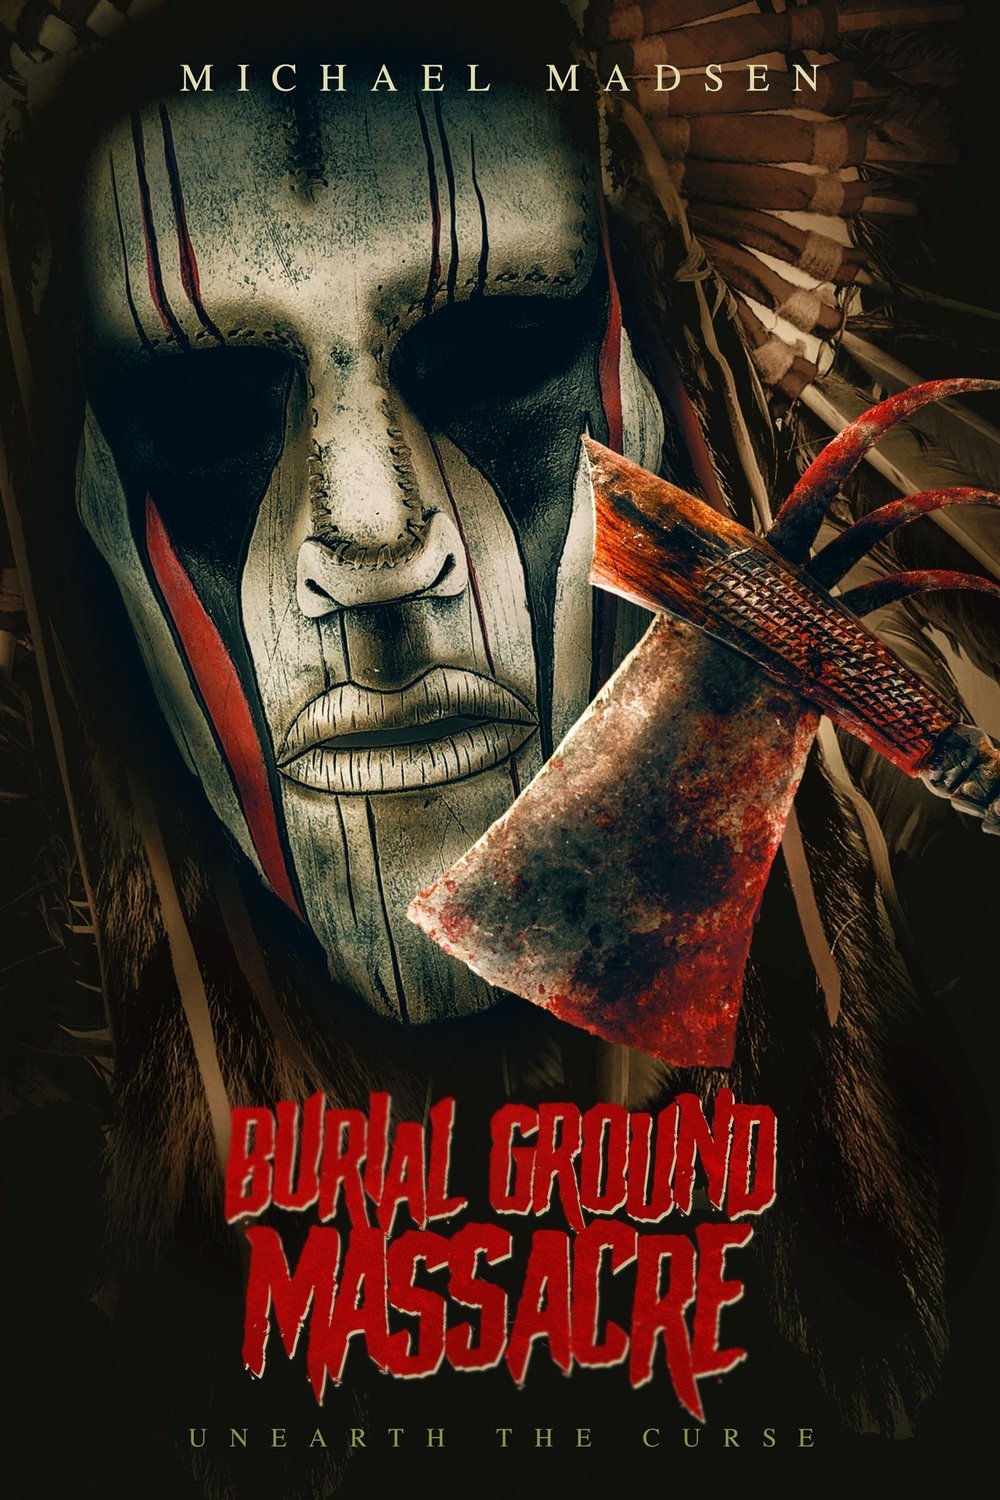 L'affiche du film Burial Ground Massacre